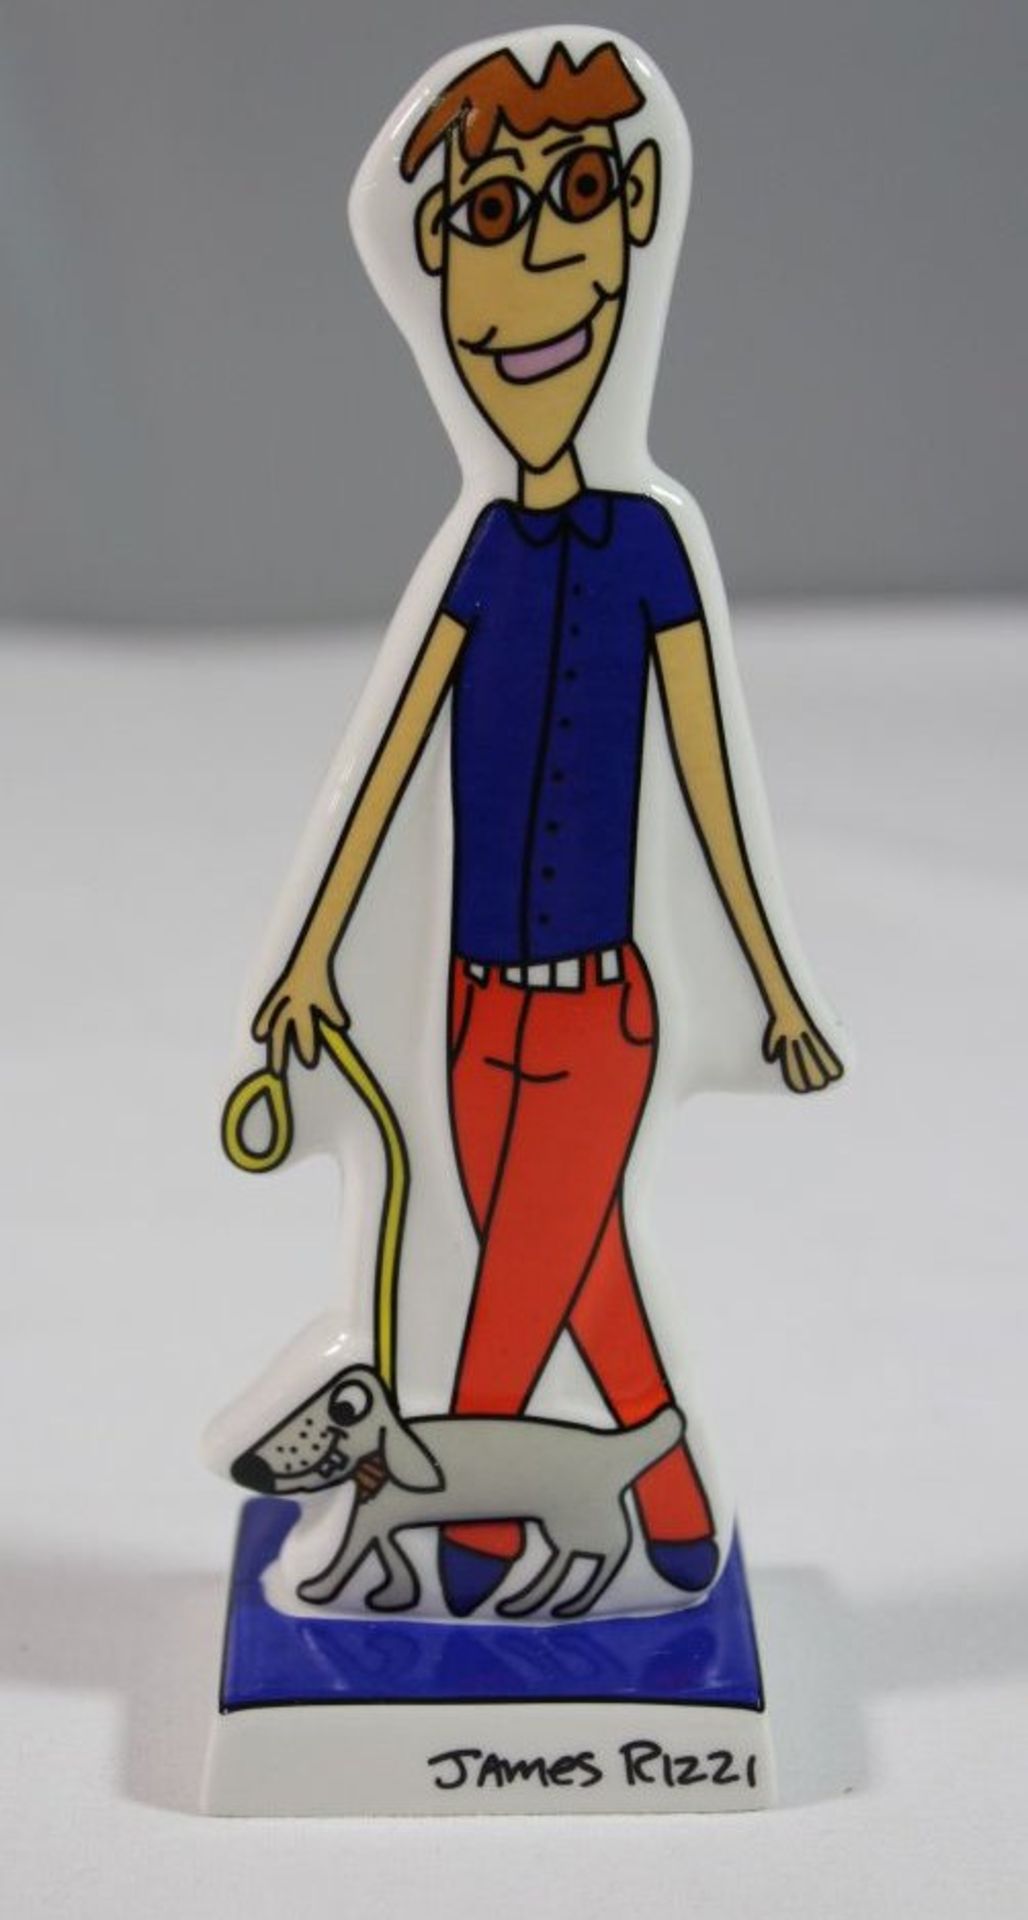 Goebel-Figur "Walk the Dog", Artis-Orbis, Entw. James Rizzi, orig. Karton, ca. H-13,5cm. - Image 2 of 4